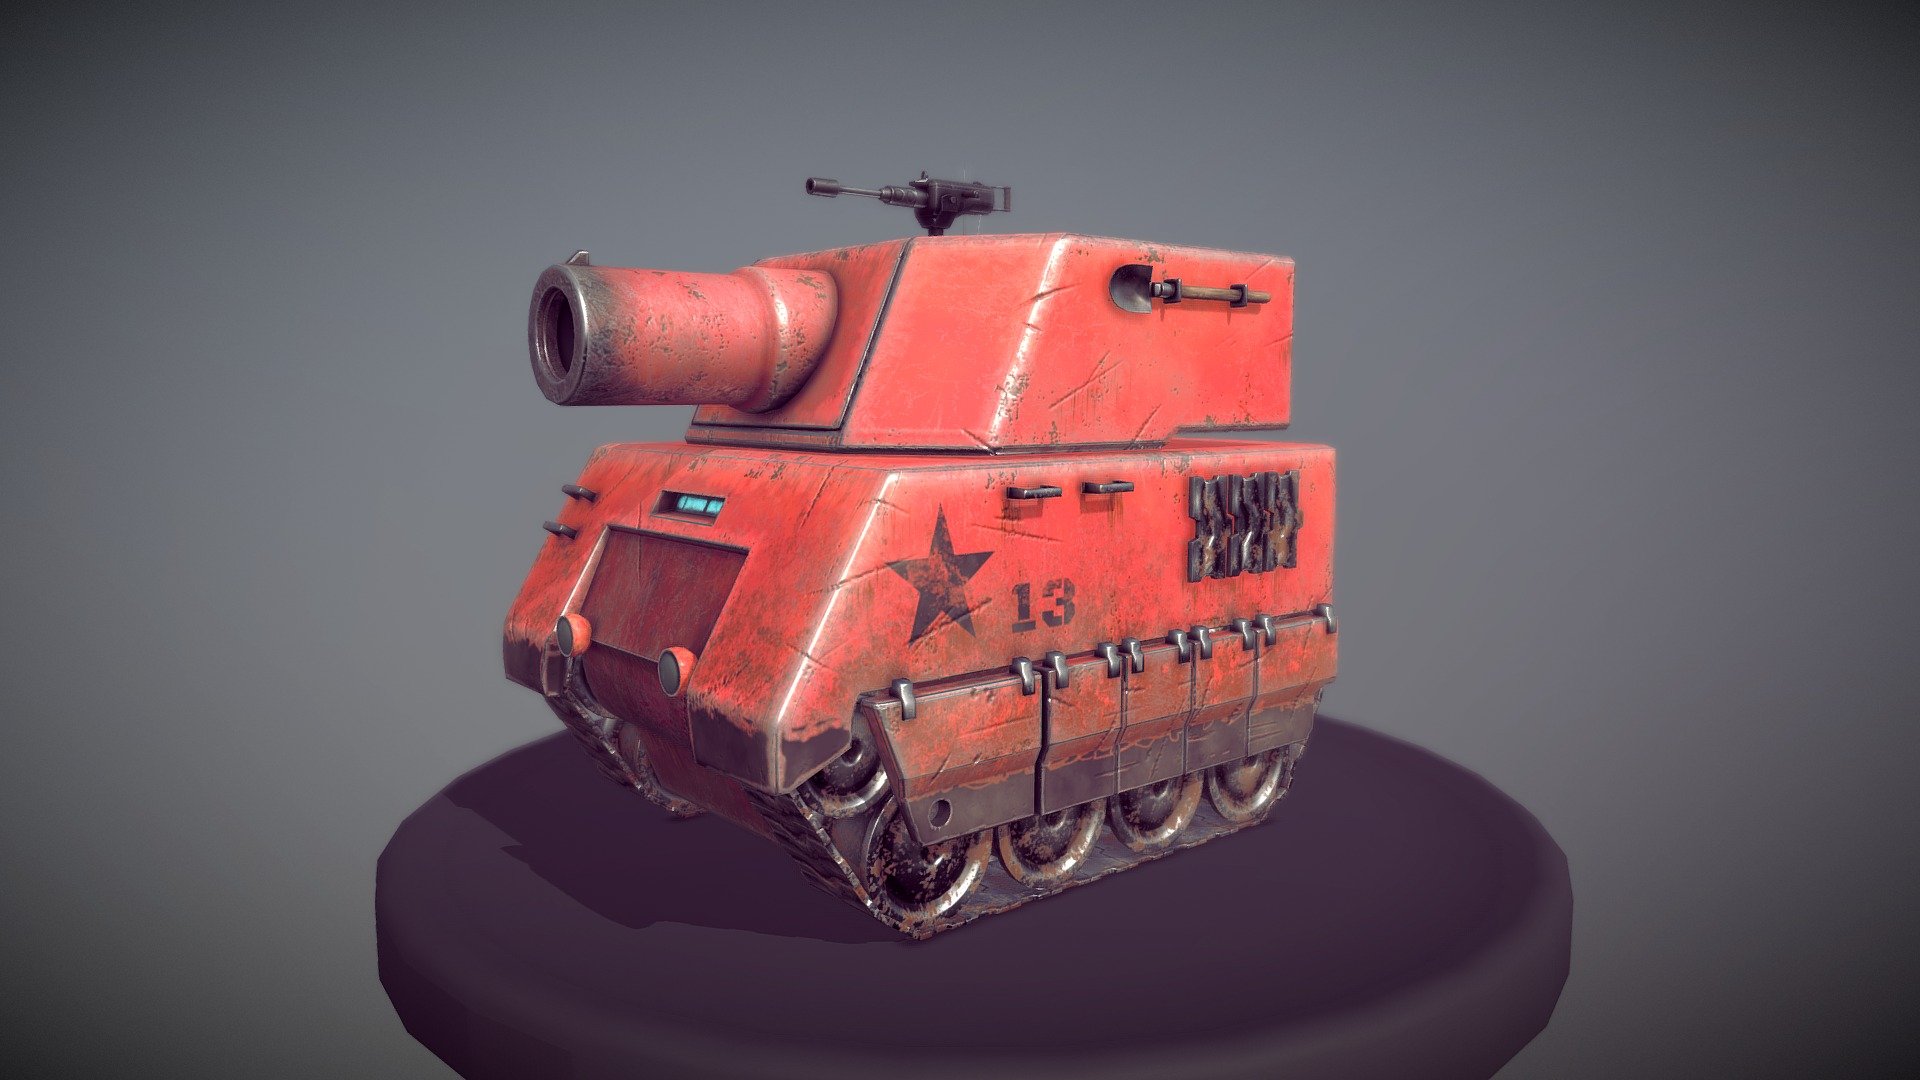 advance-wars-tank-m-3d-model-by-clement-borja-bobtheprinny-c56b4d4-sketchfab